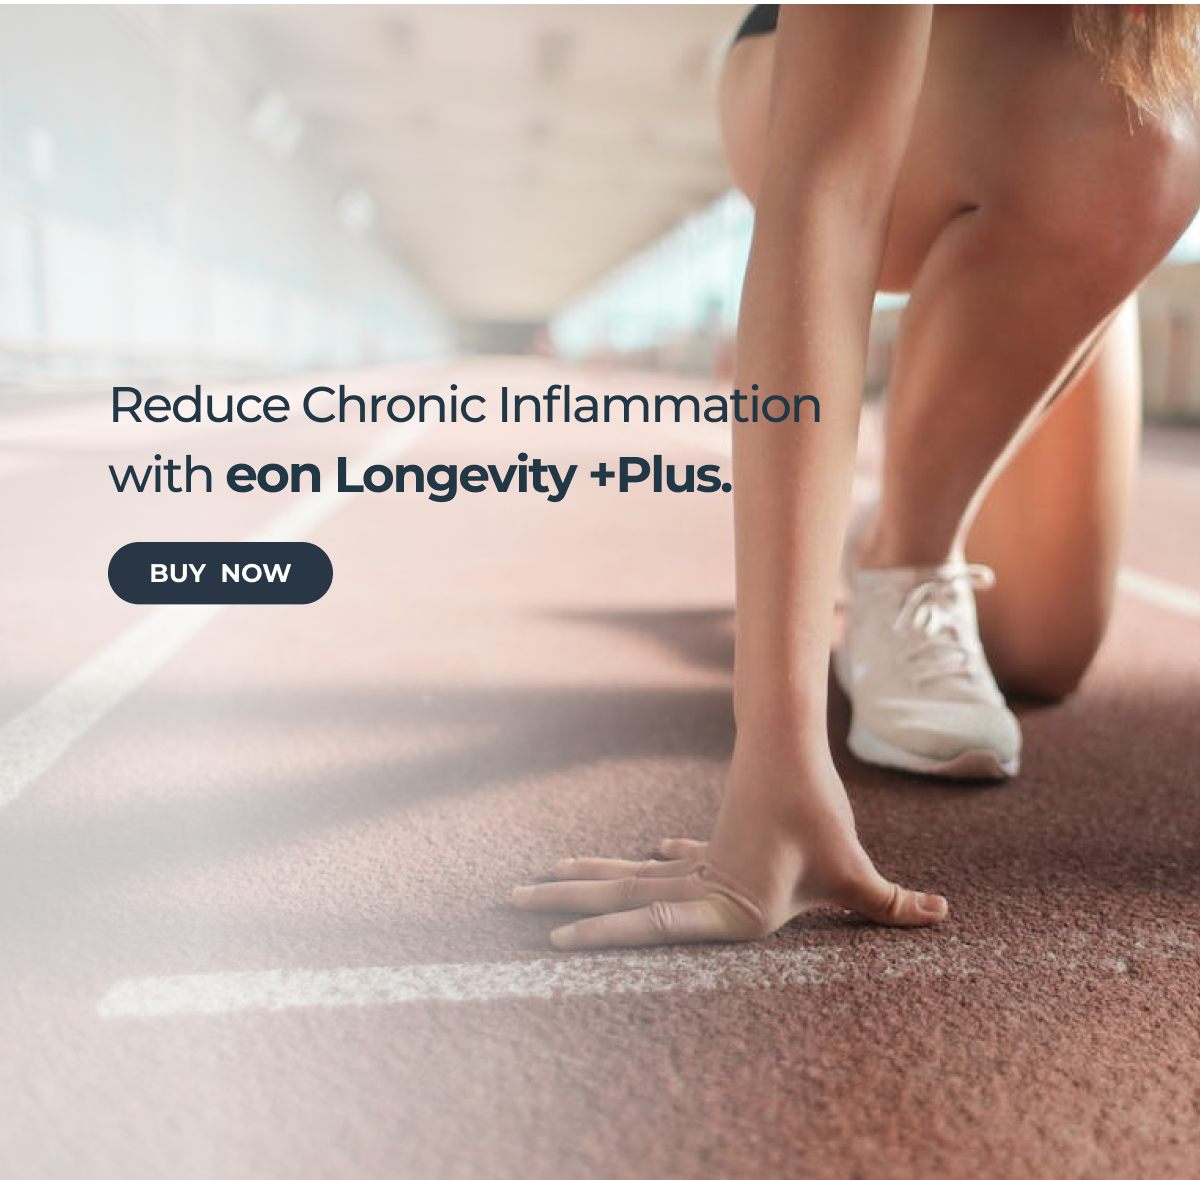 Reduce Chronic Inflammation with eon Longevity +Plus. BUY NOW